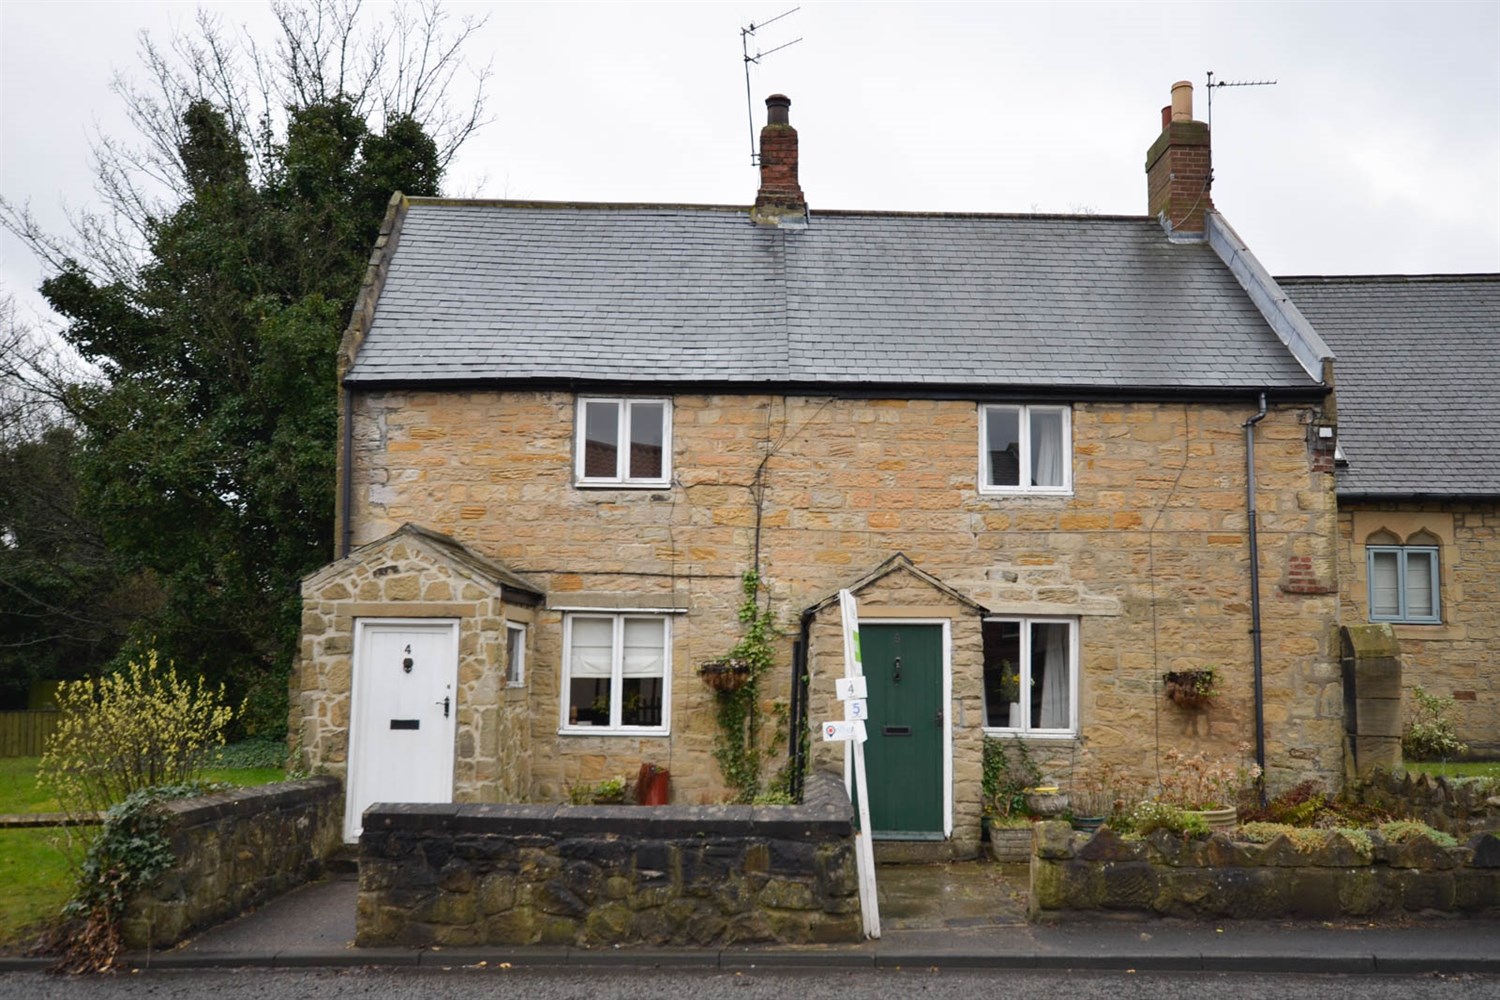 4 bed detached cottage for sale in Monkton Village, Jarrow - Property Image 1